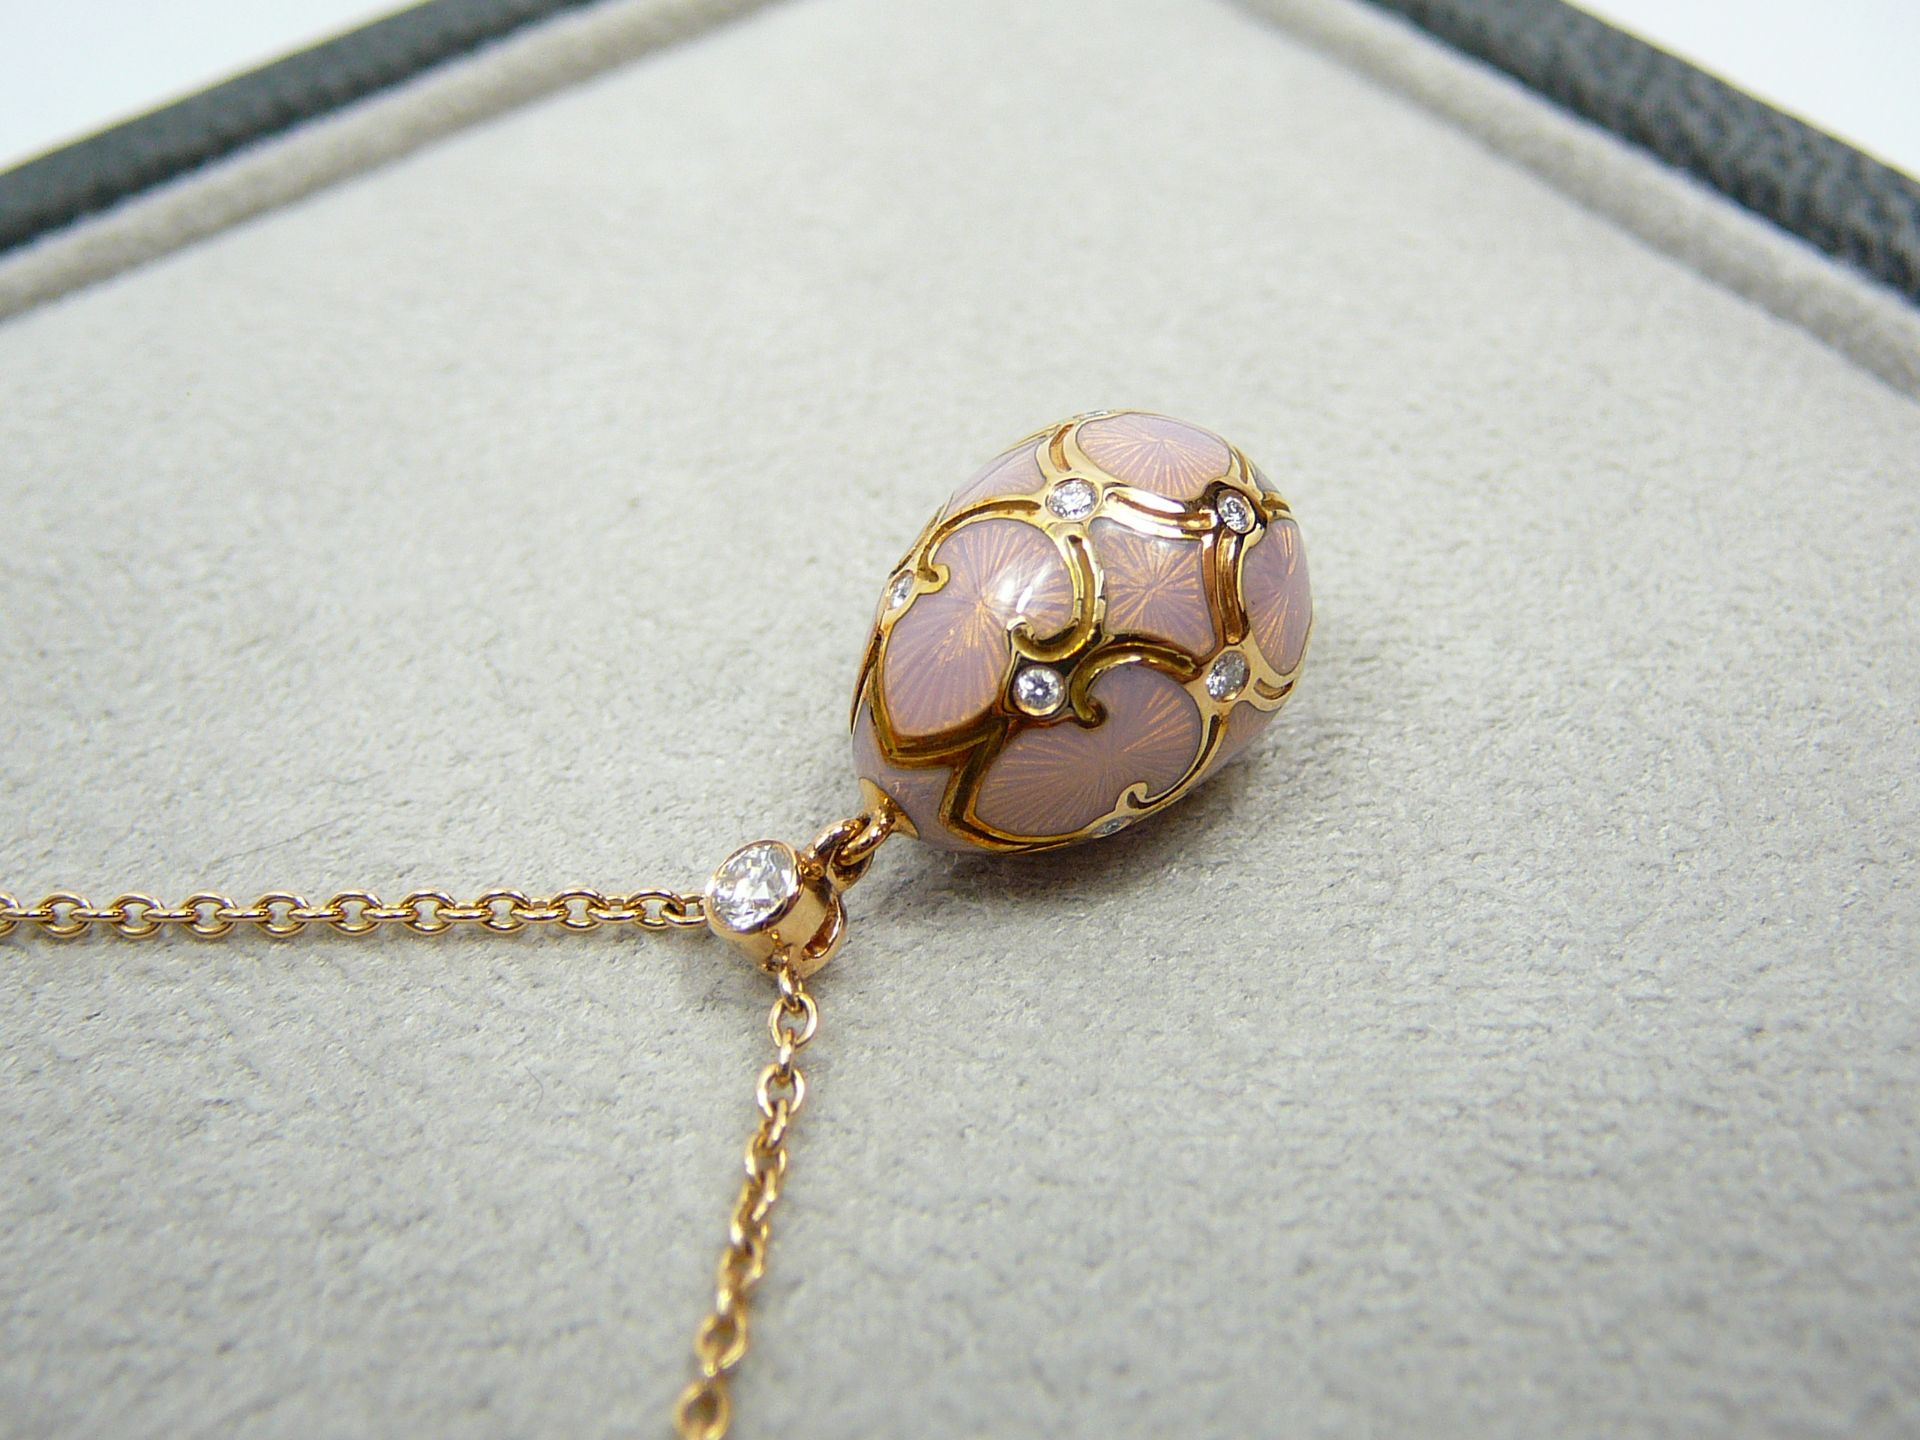 Faberge gold egg pendant - Image 3 of 4